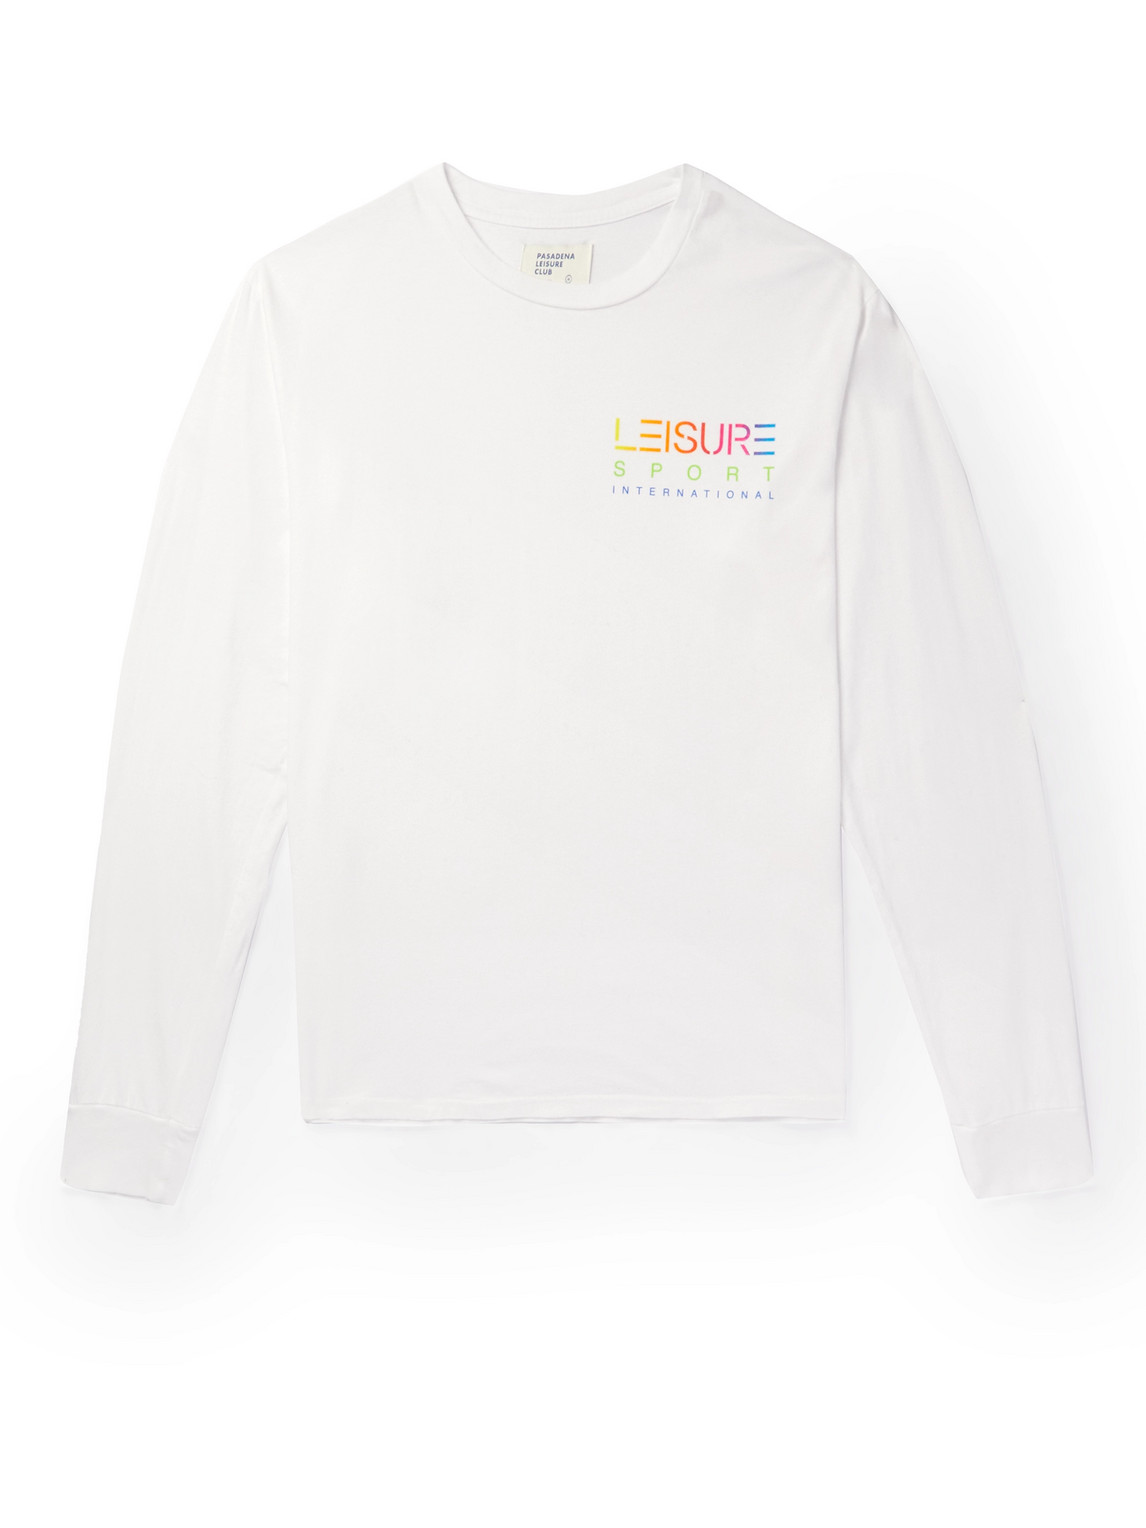 Pasadena Leisure Club International Printed Cotton-jersey T-shirt In White